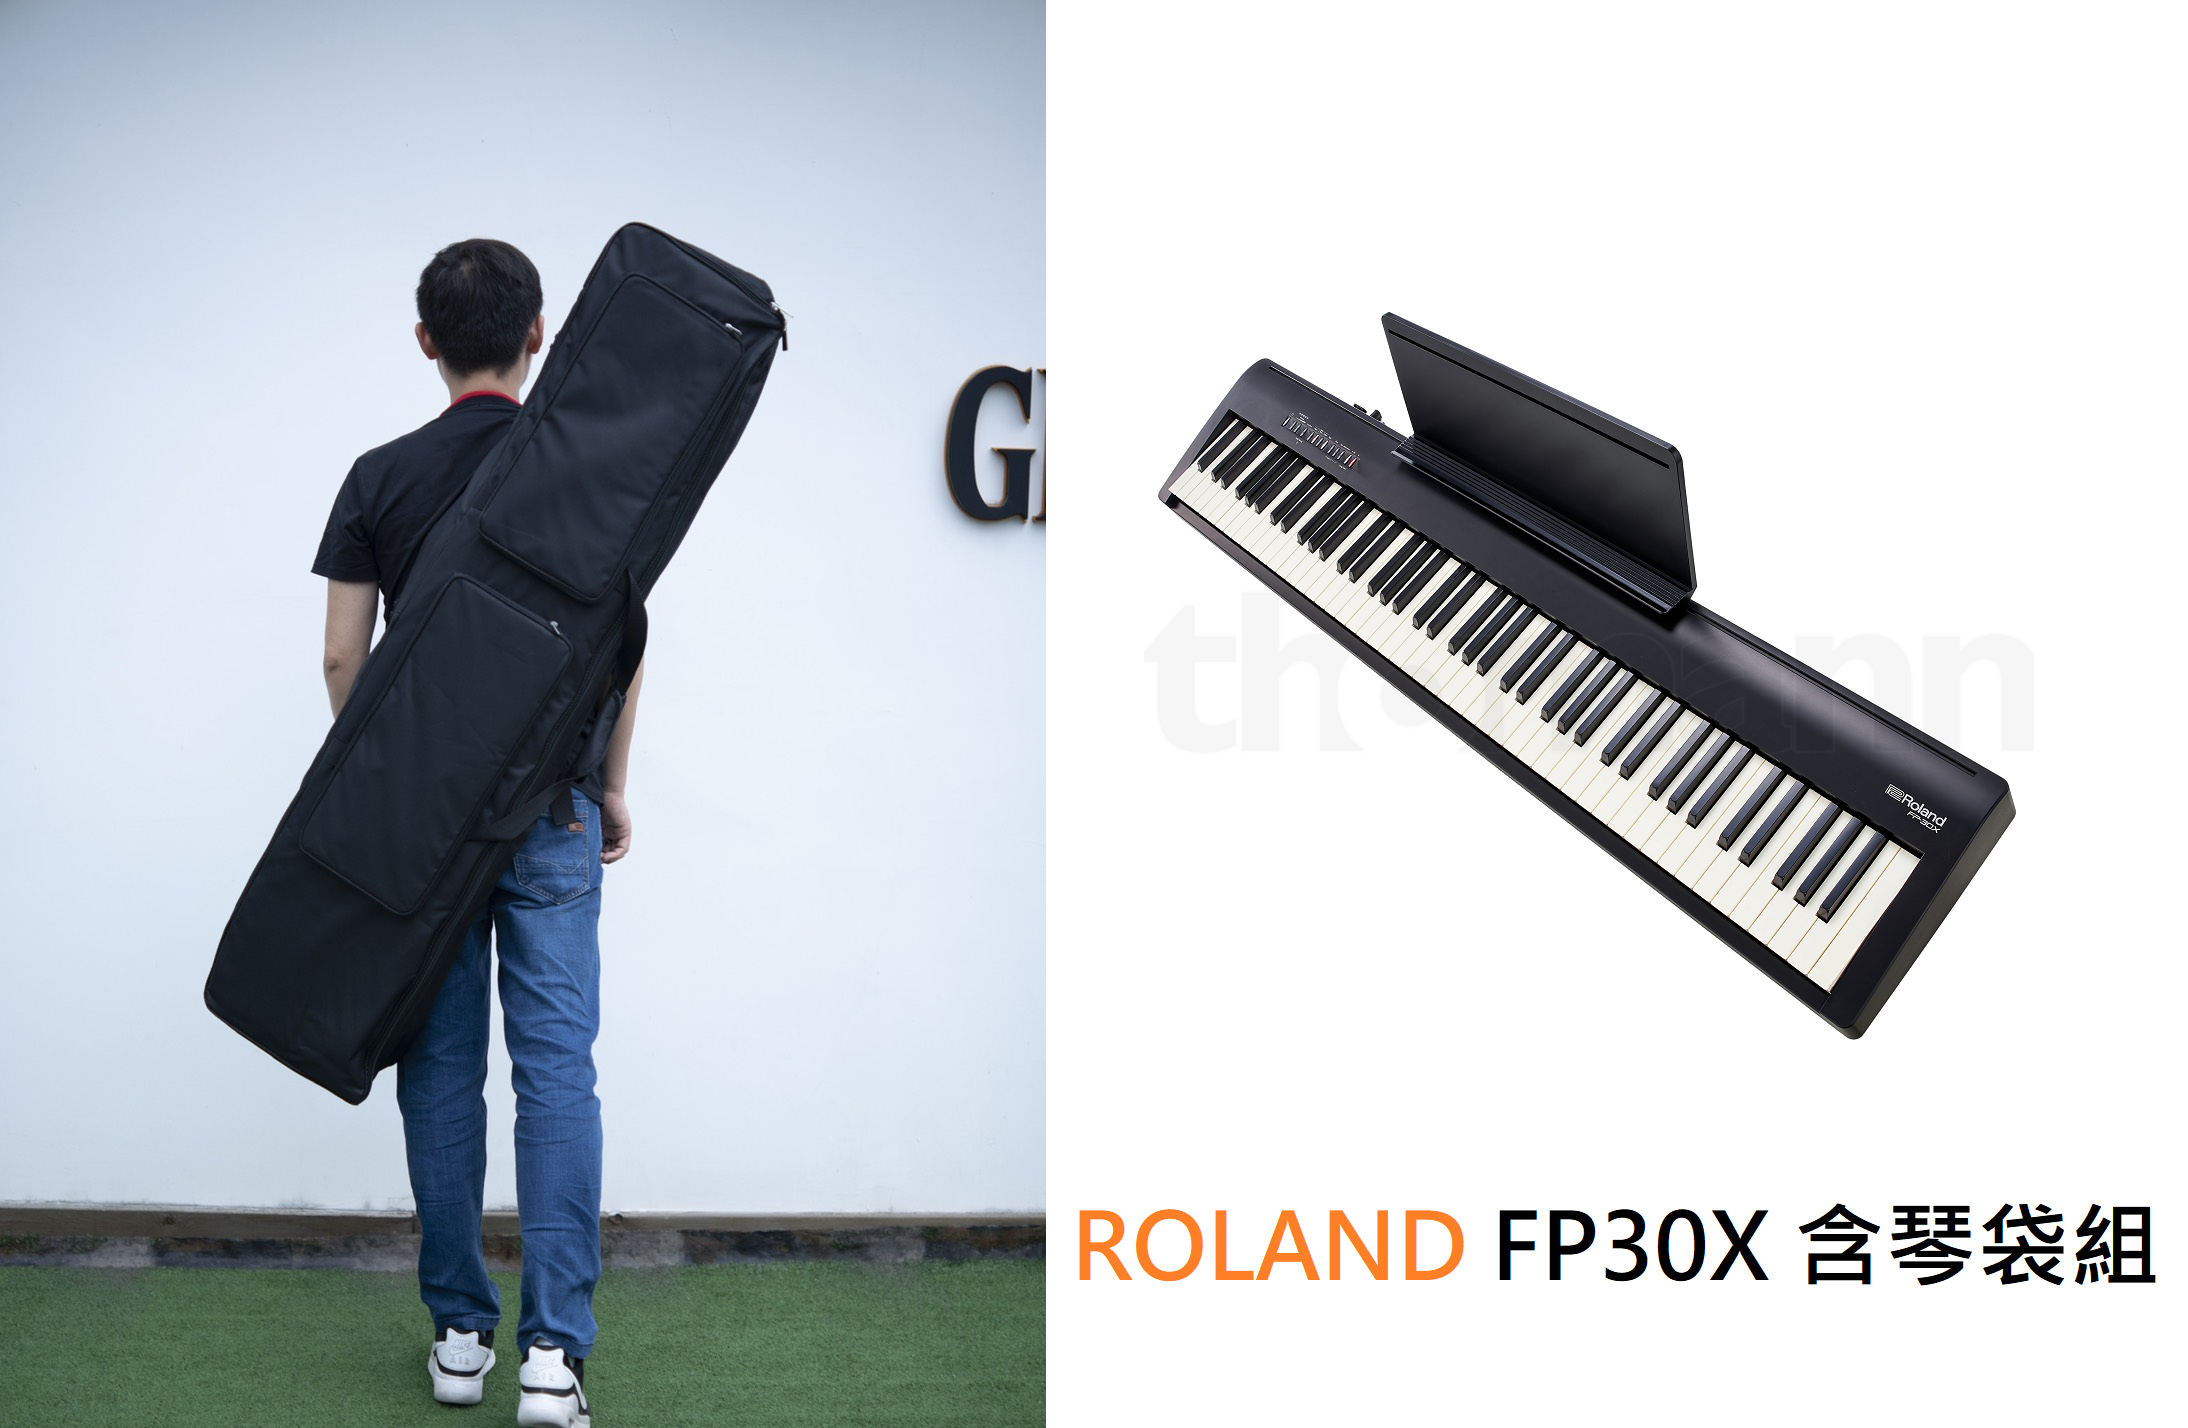 Roland FP-30X 電鋼琴 88鍵 贈琴背袋